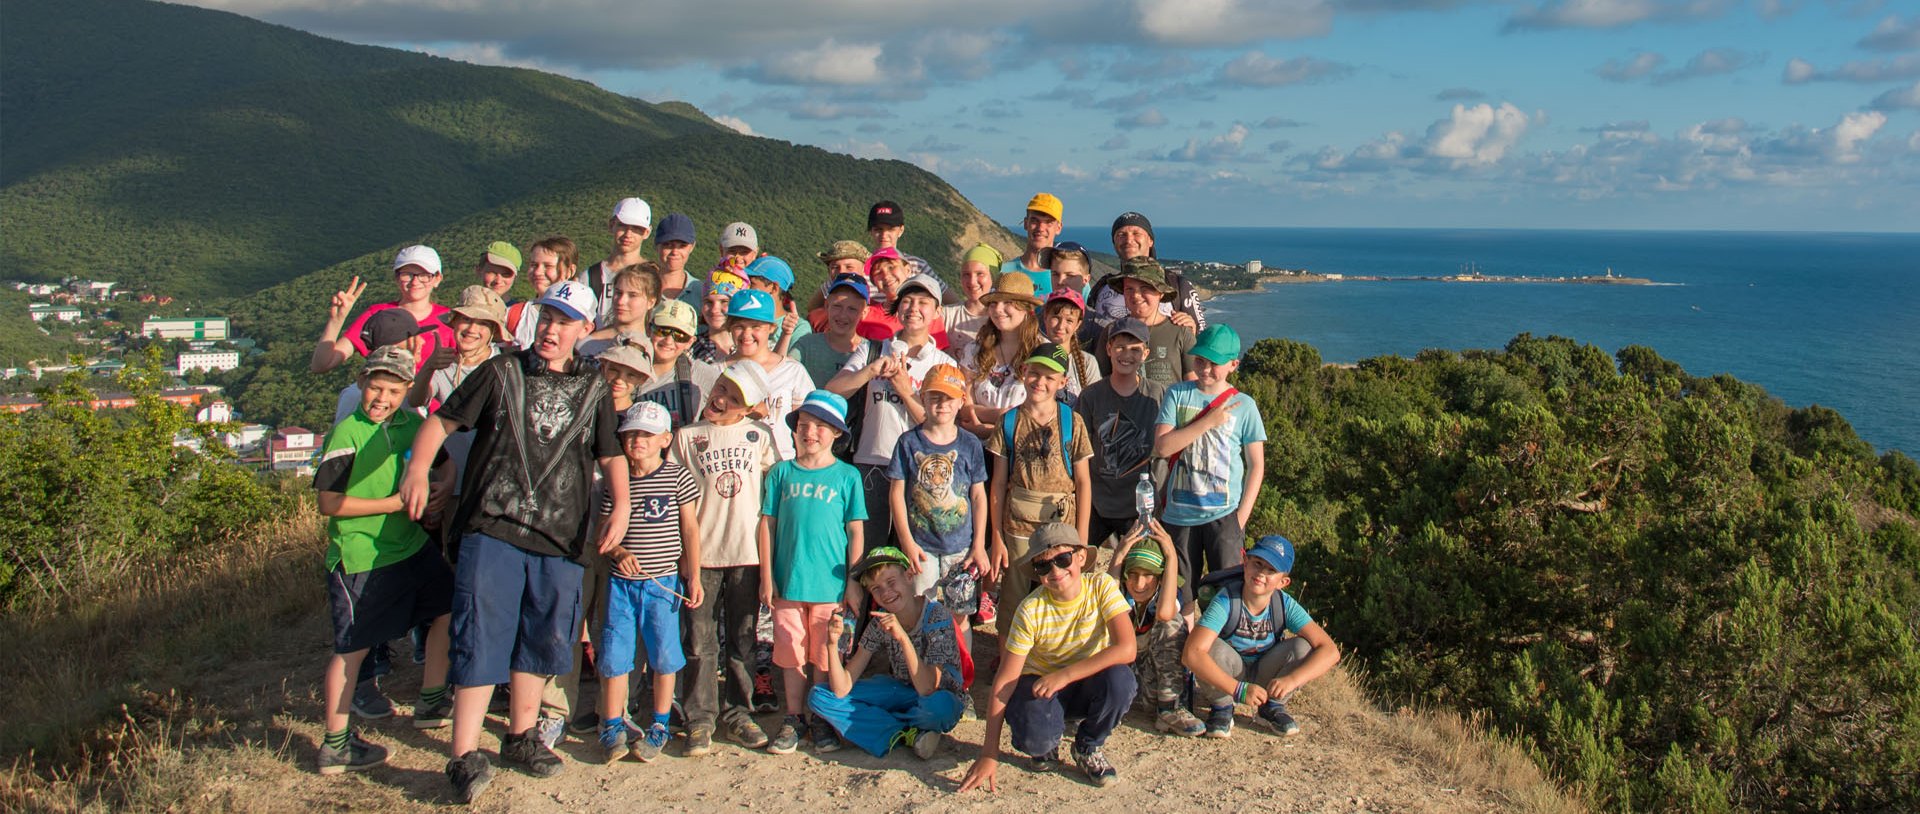 Детский лагерь Койнобори Додзё на Черном море, лето 2019